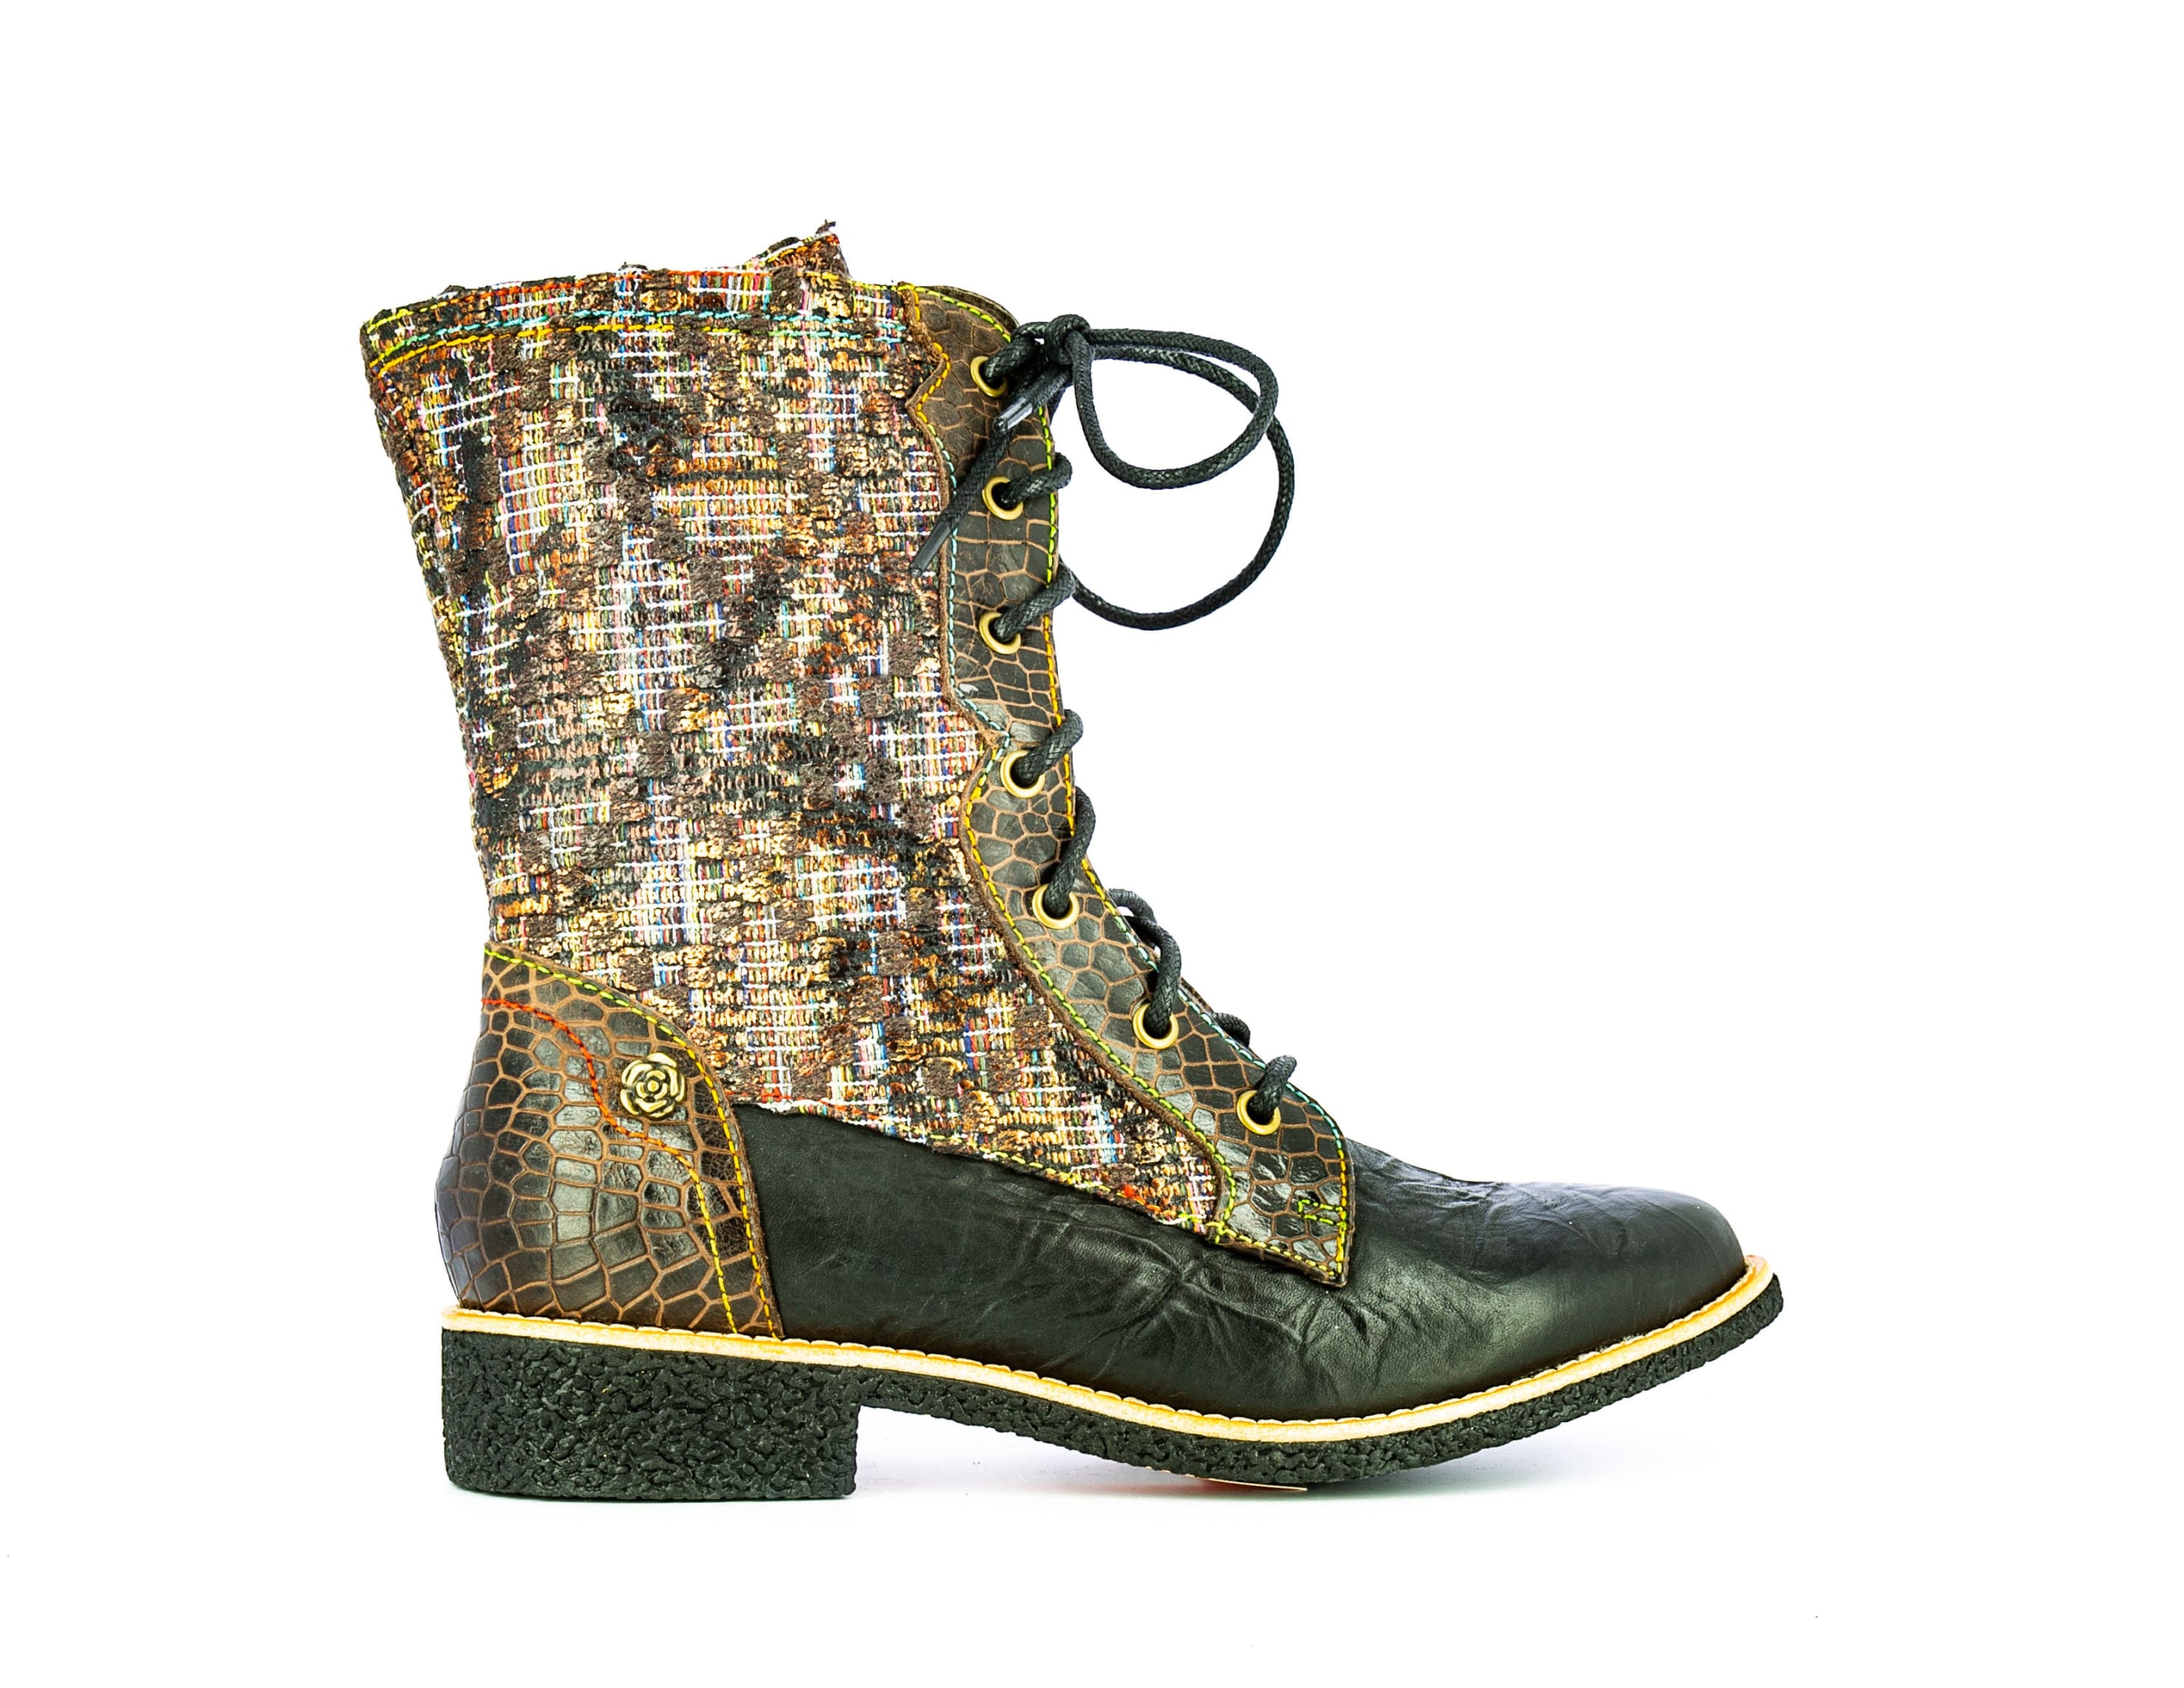 COCRALIEO 521 - 35 / Black - Boots